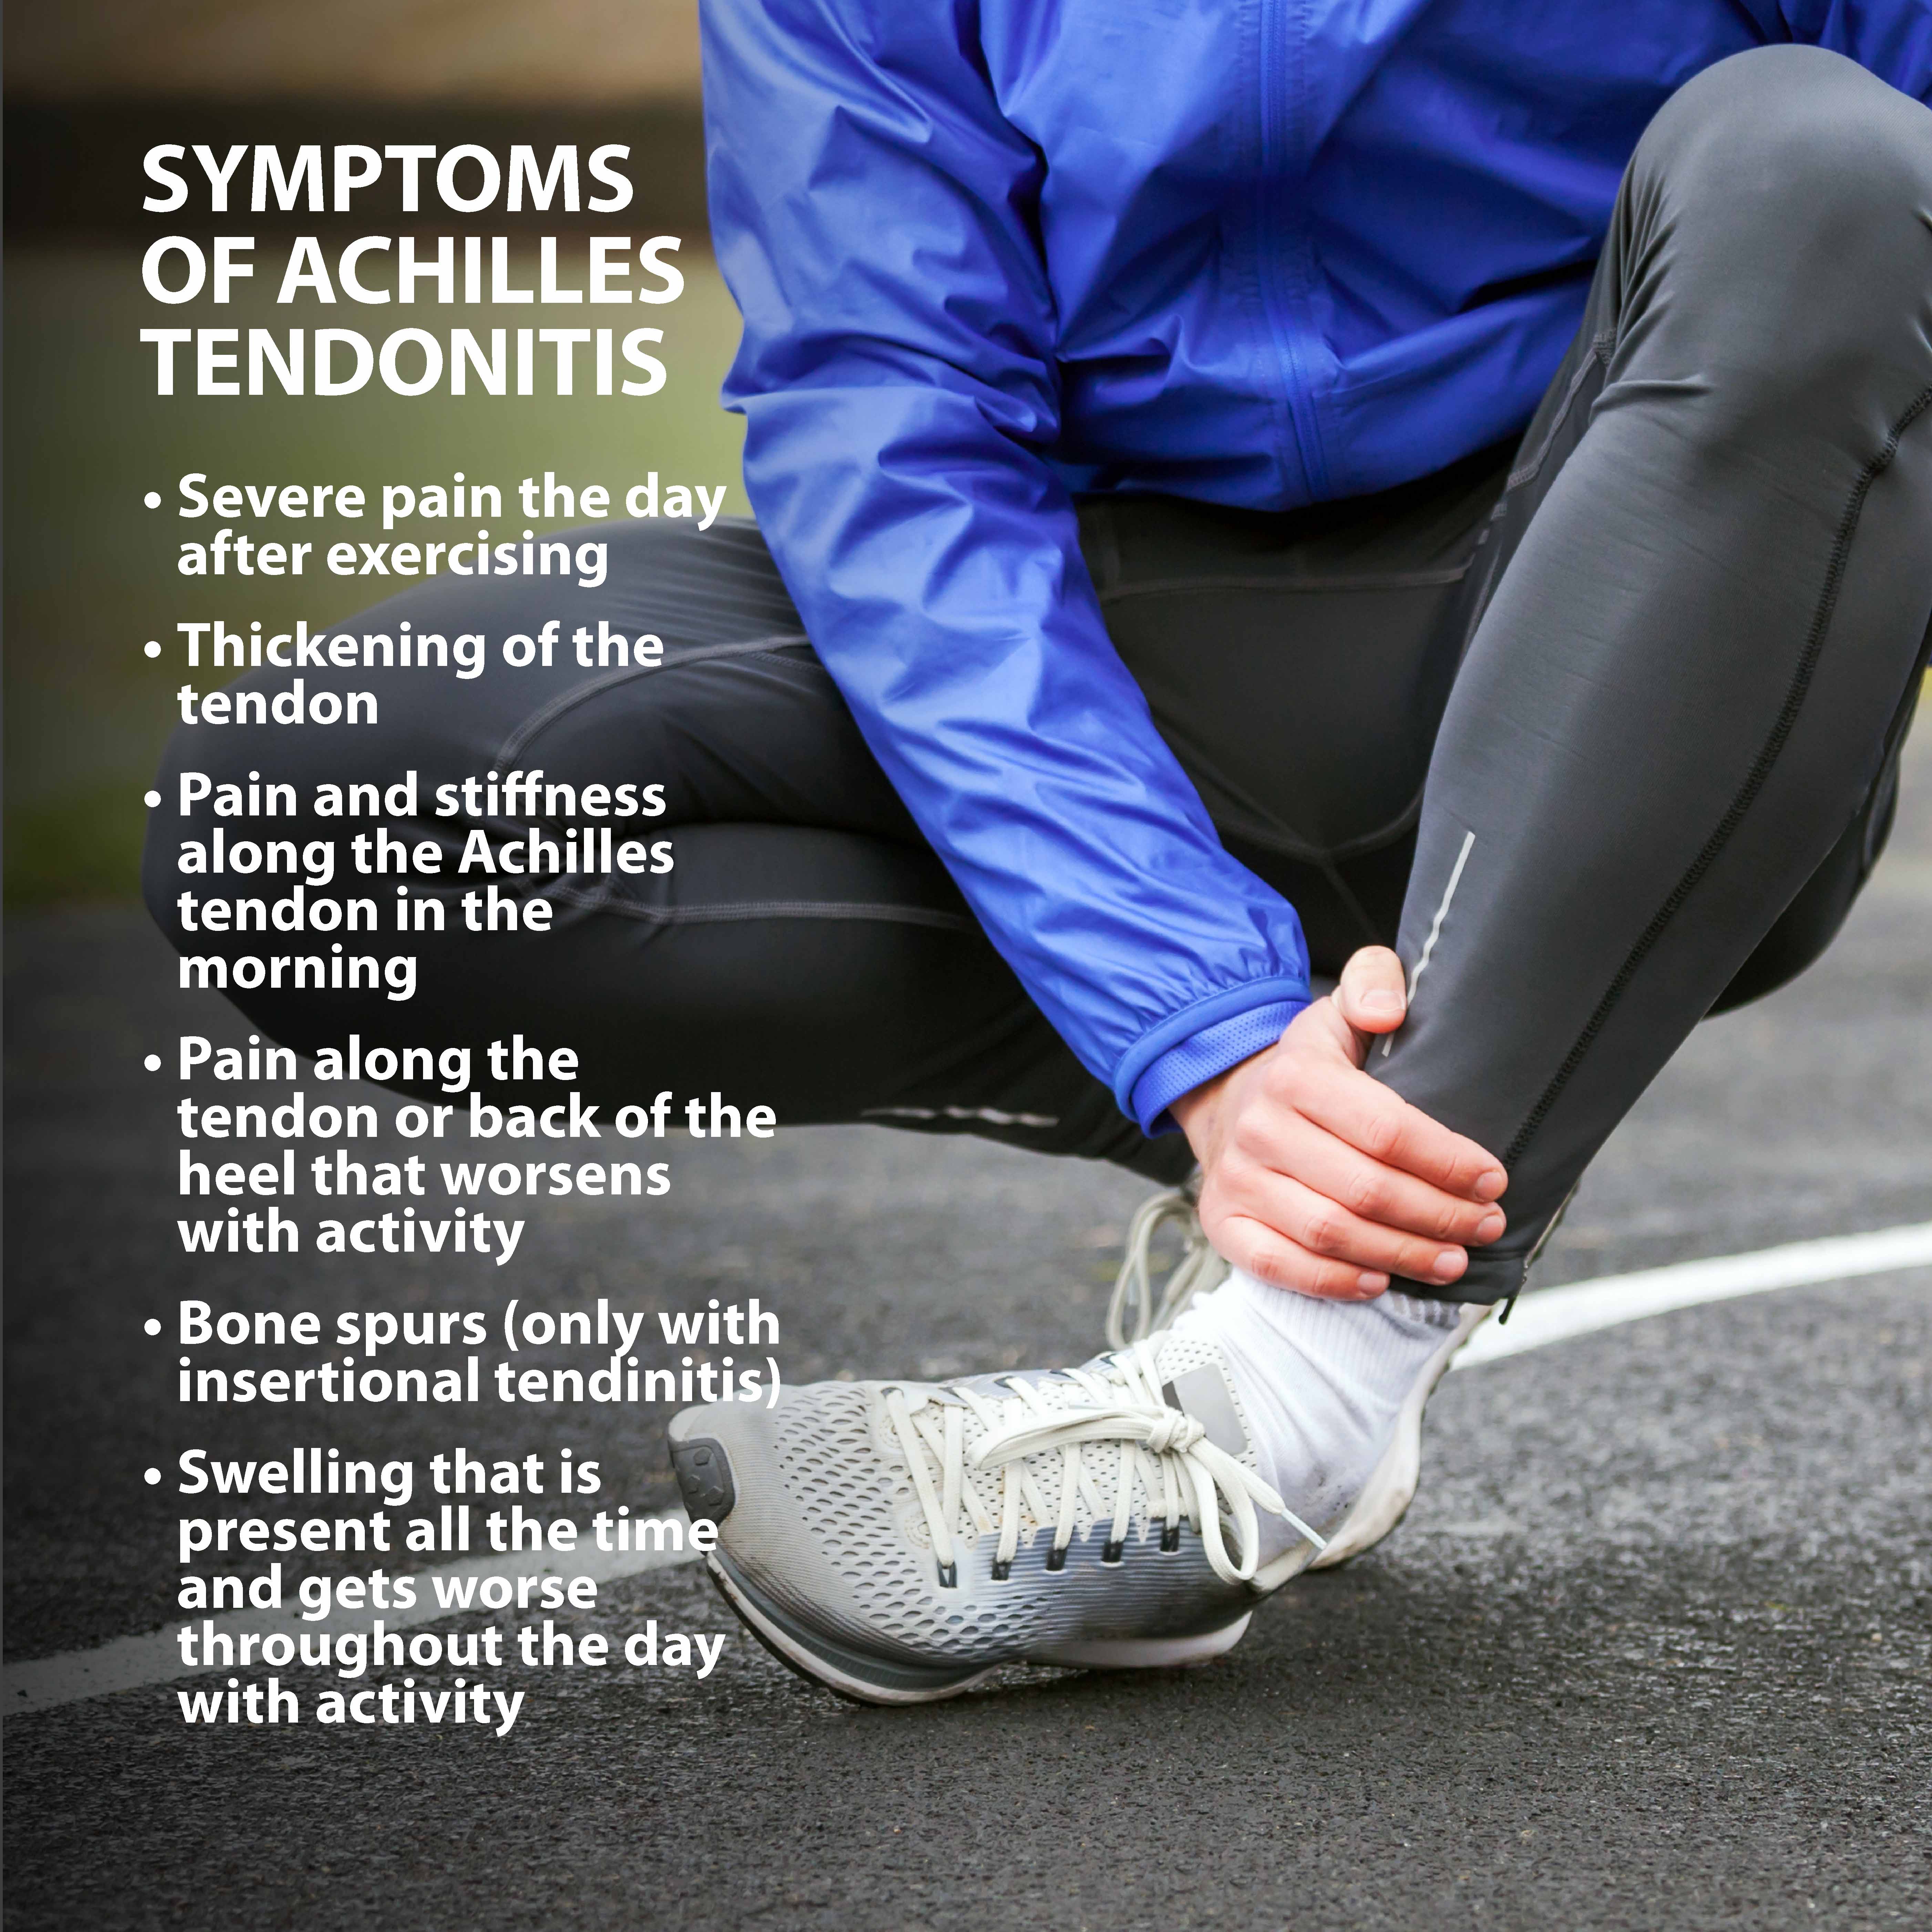 Symptoms of Achilles Tendonitis graphic